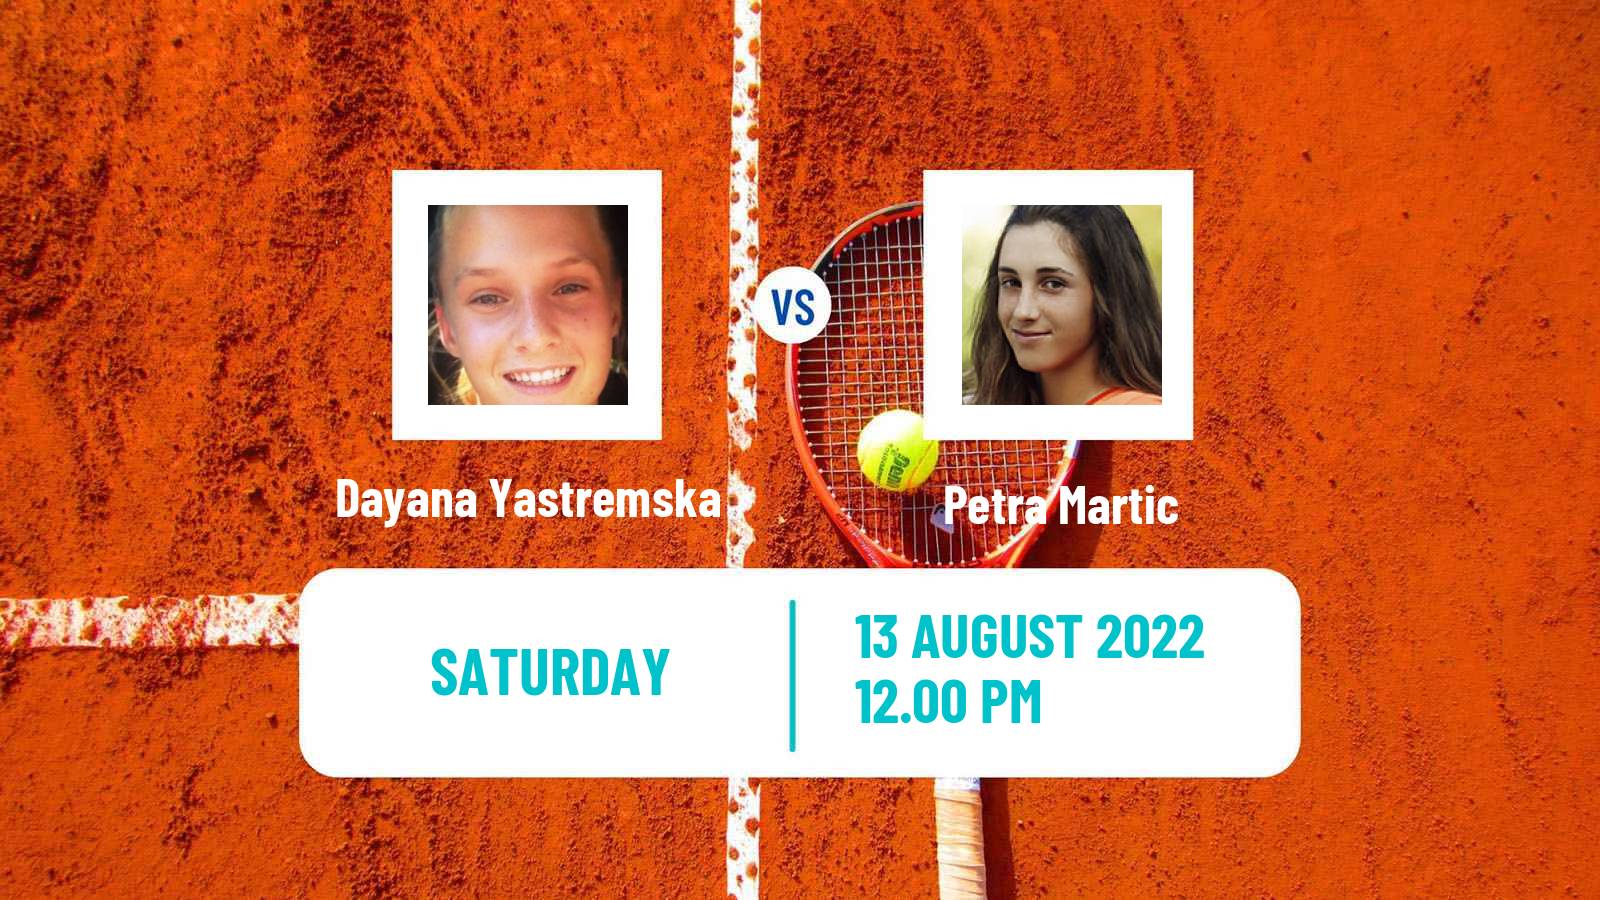 Tennis WTA Cincinnati Dayana Yastremska - Petra Martic